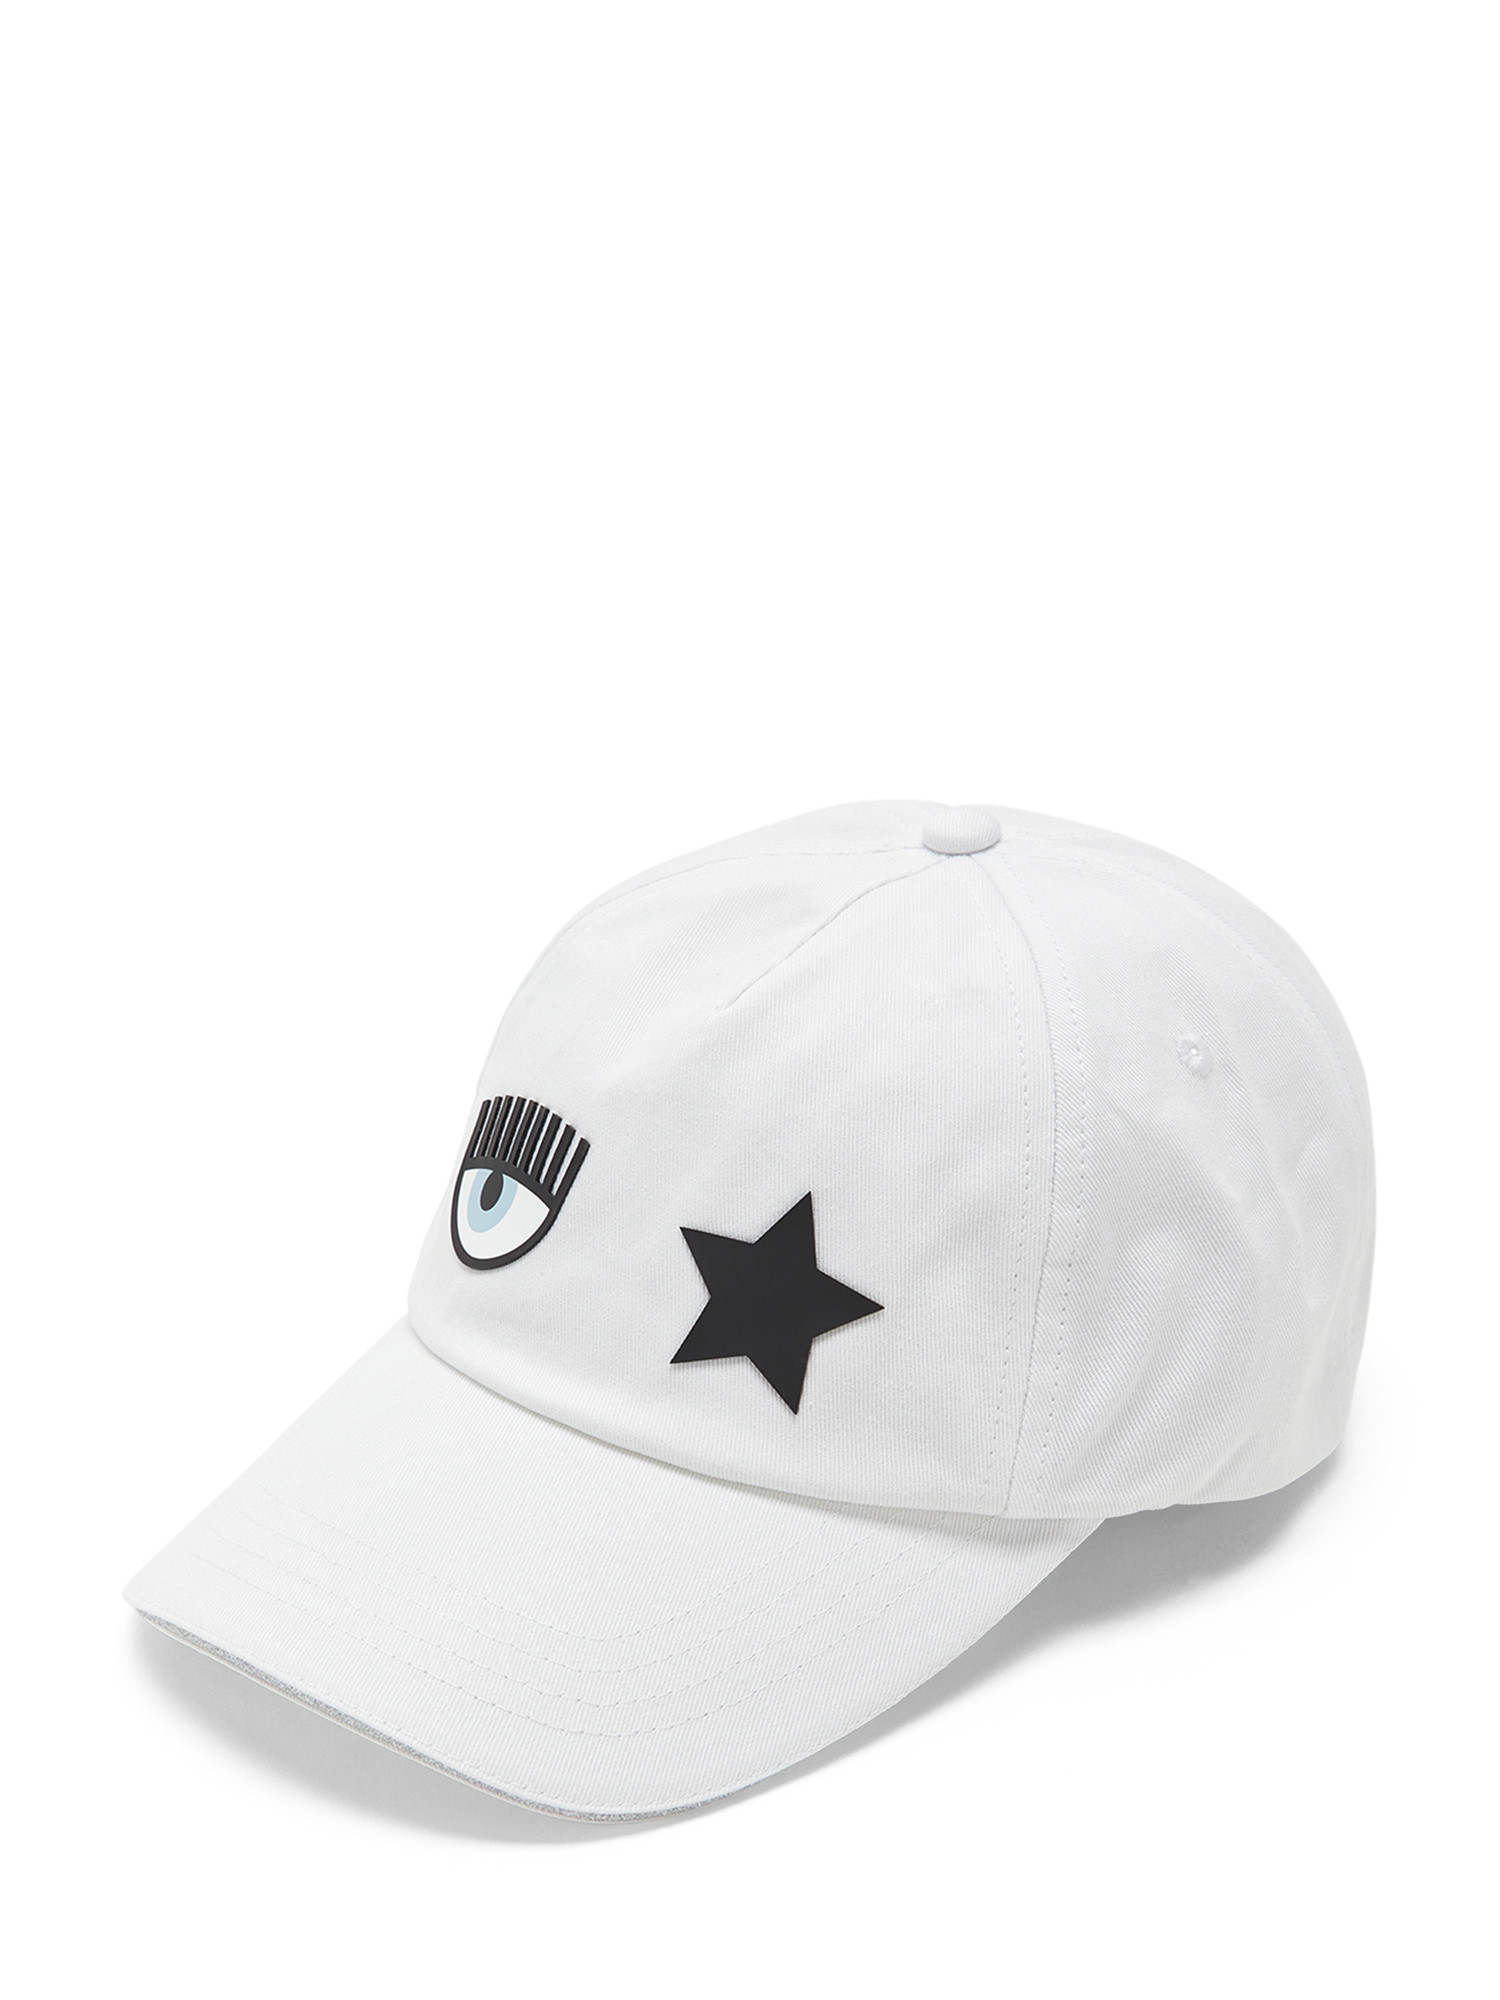 Chiara Ferragni - Eye Star baseball hat, White, large image number 0